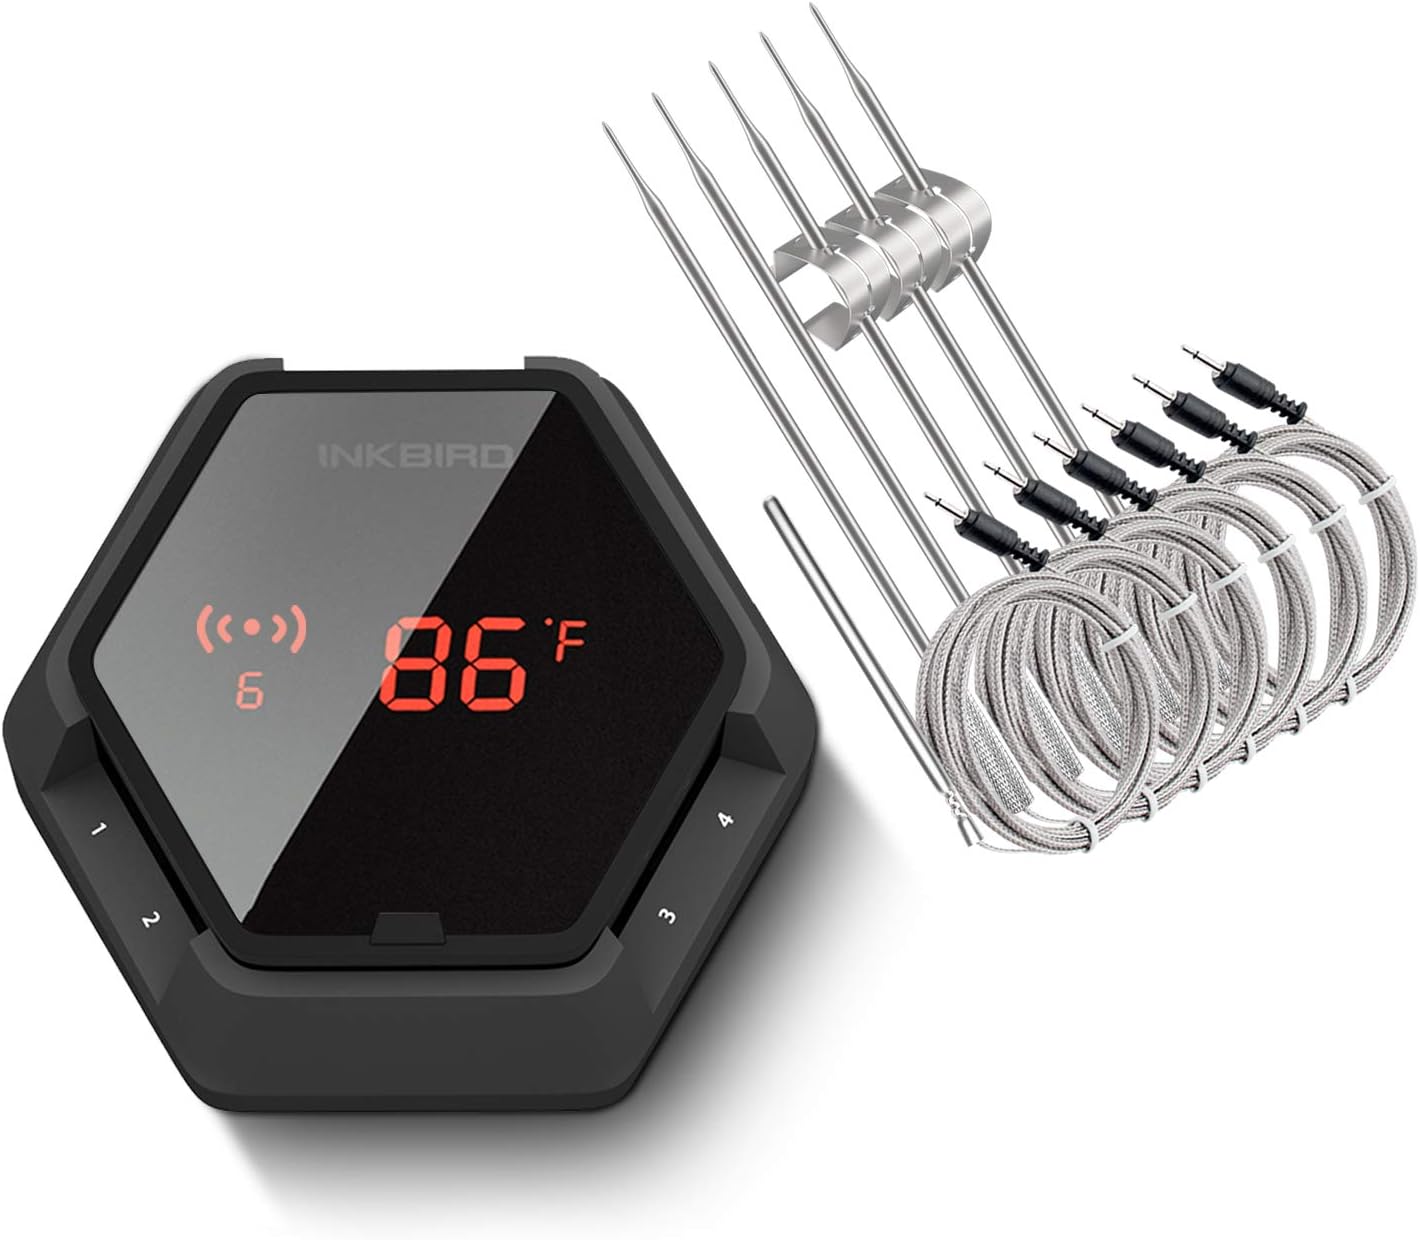 Inkbird Grill Bluetooth BBQ Thermometer Wireless IBT-6XS, 6 Probes Digital Smoker Grill Thermometer for Cooking,150ft Bluetooth Meat Thermometer, Magnet, Timer, Alarm for Kitchen, Food (Black)